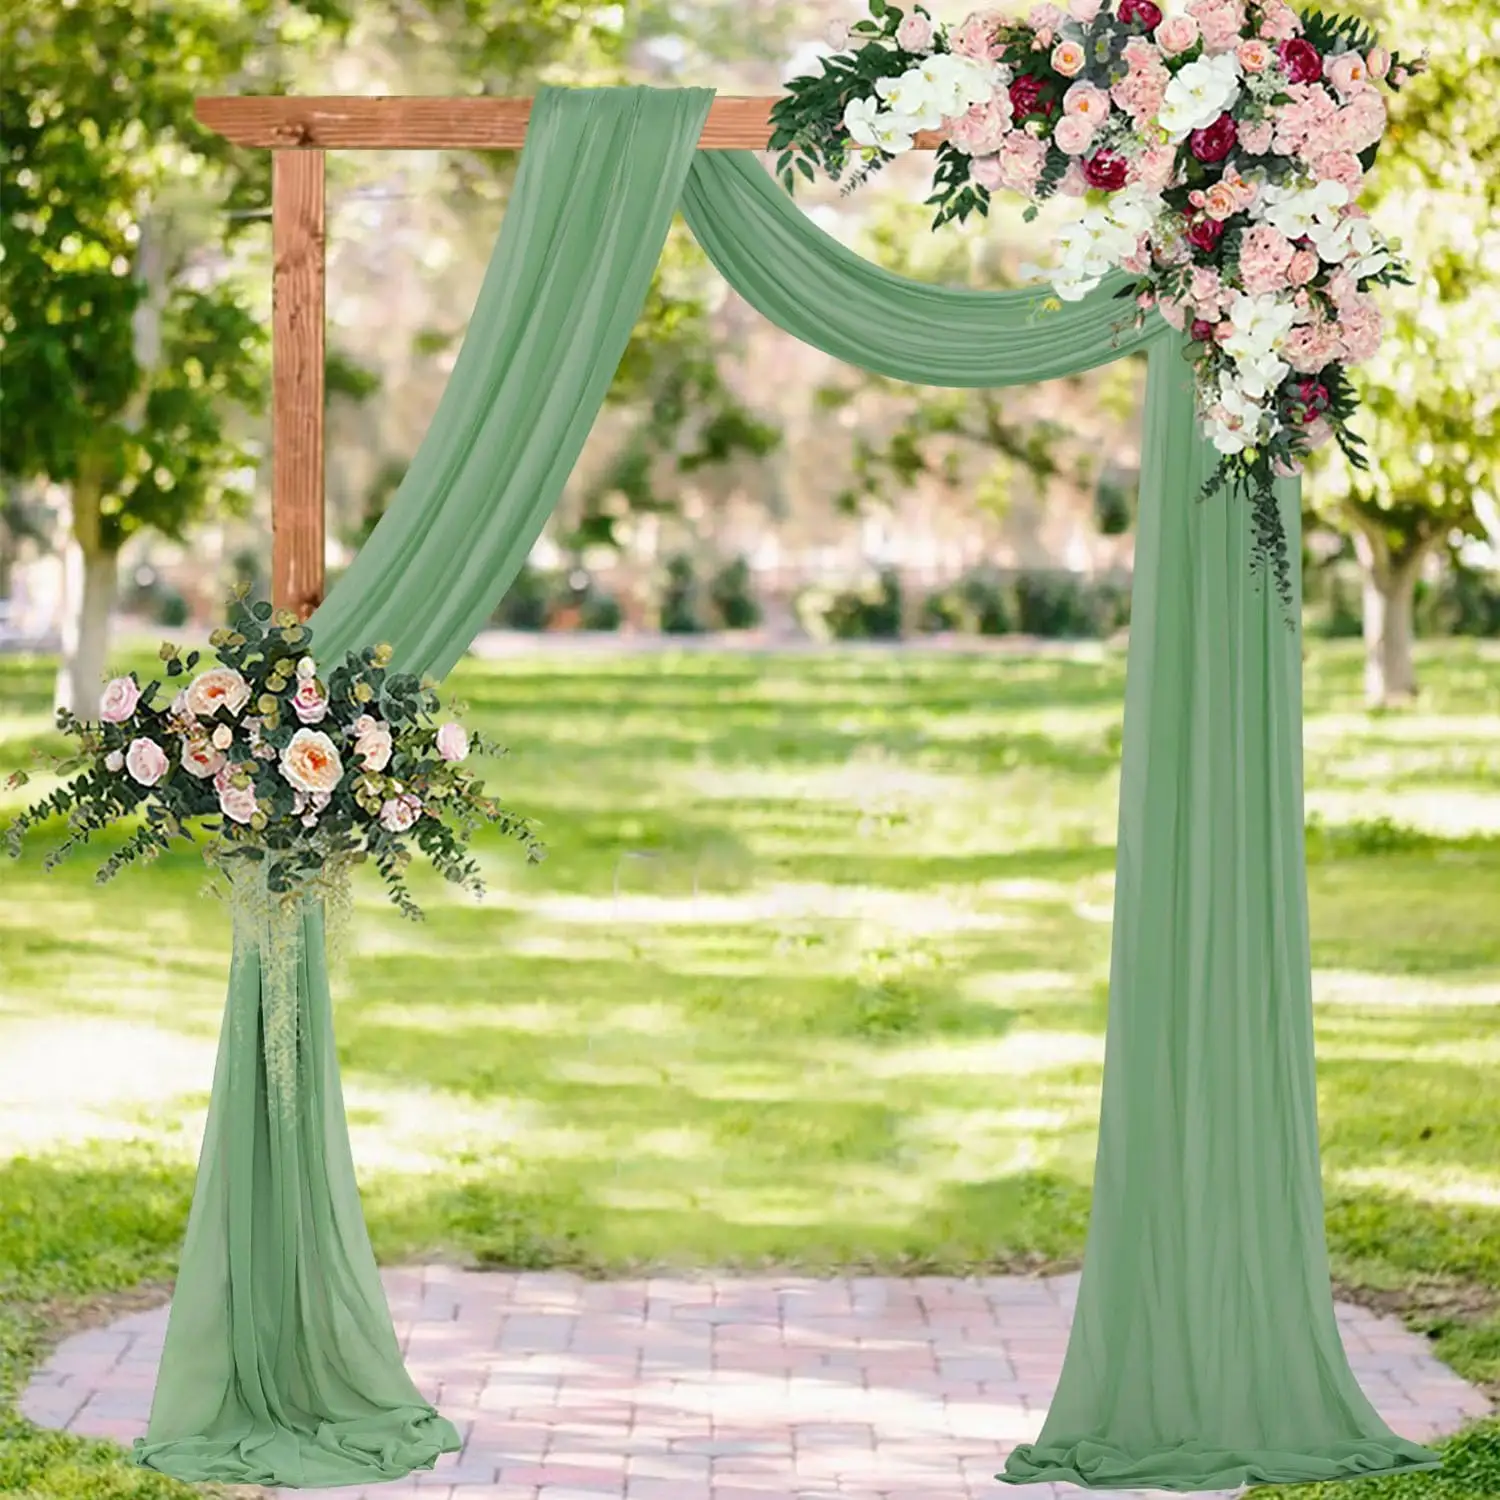 Wholesale Hot Sale Wedding Ceiling Drapes Luxury Chiffon Fabric High Quality Backdrop Background for Photo